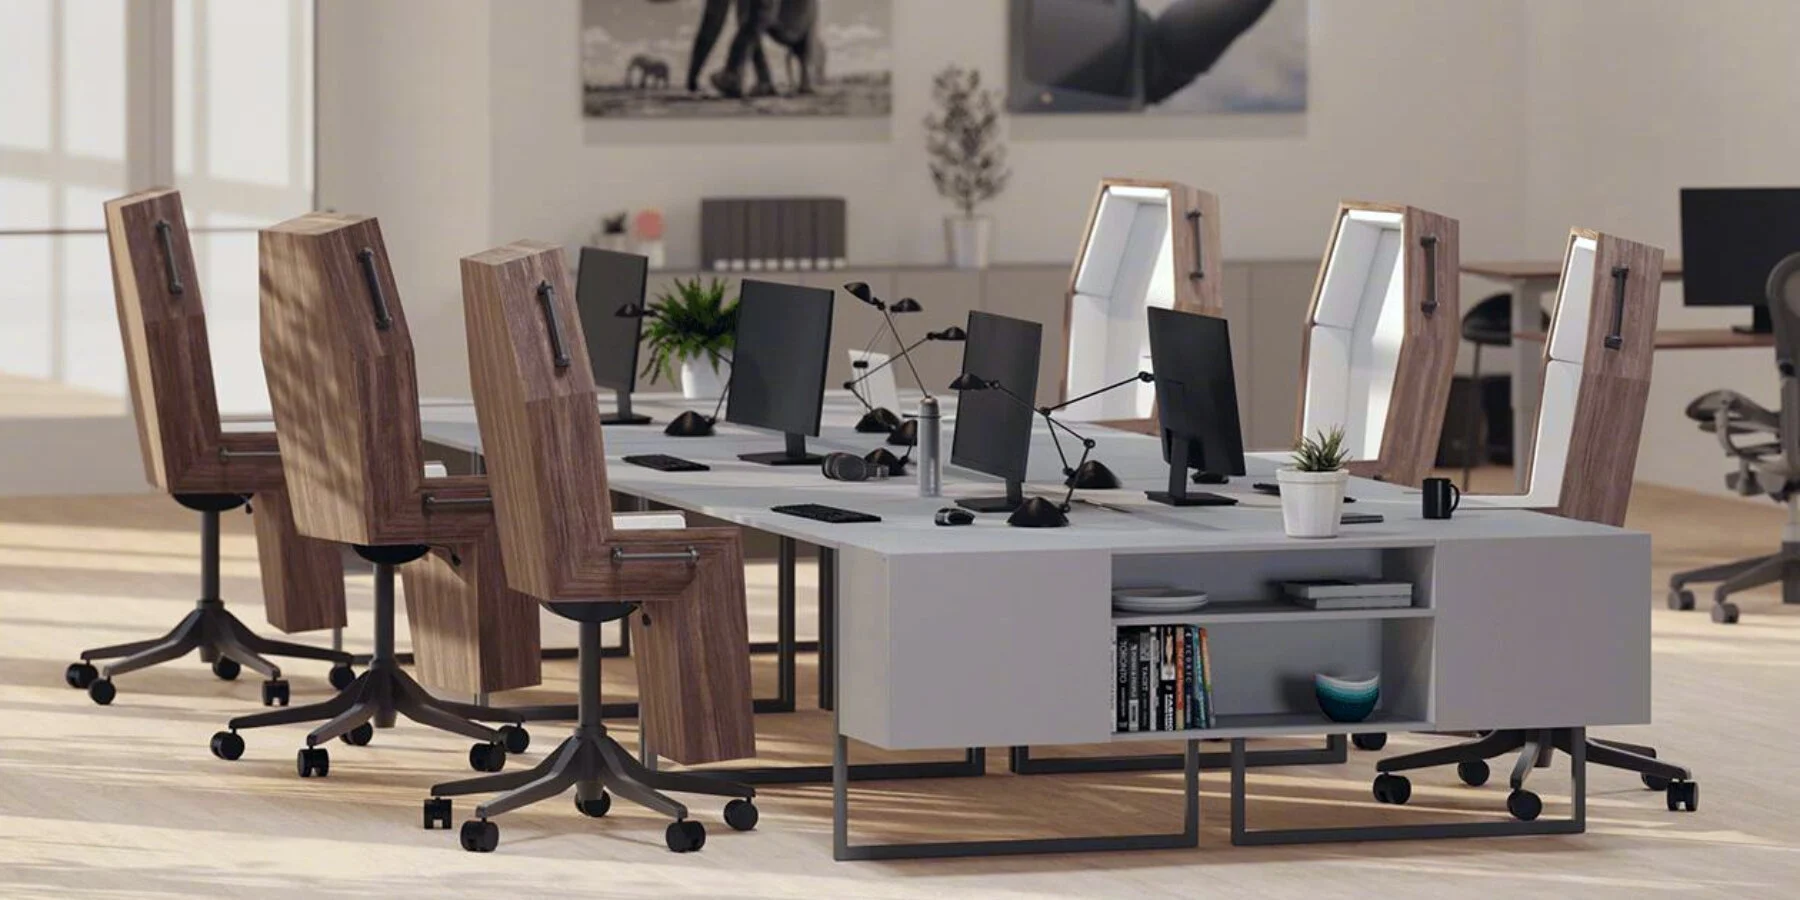 concept coffin office chairs designboom 1800